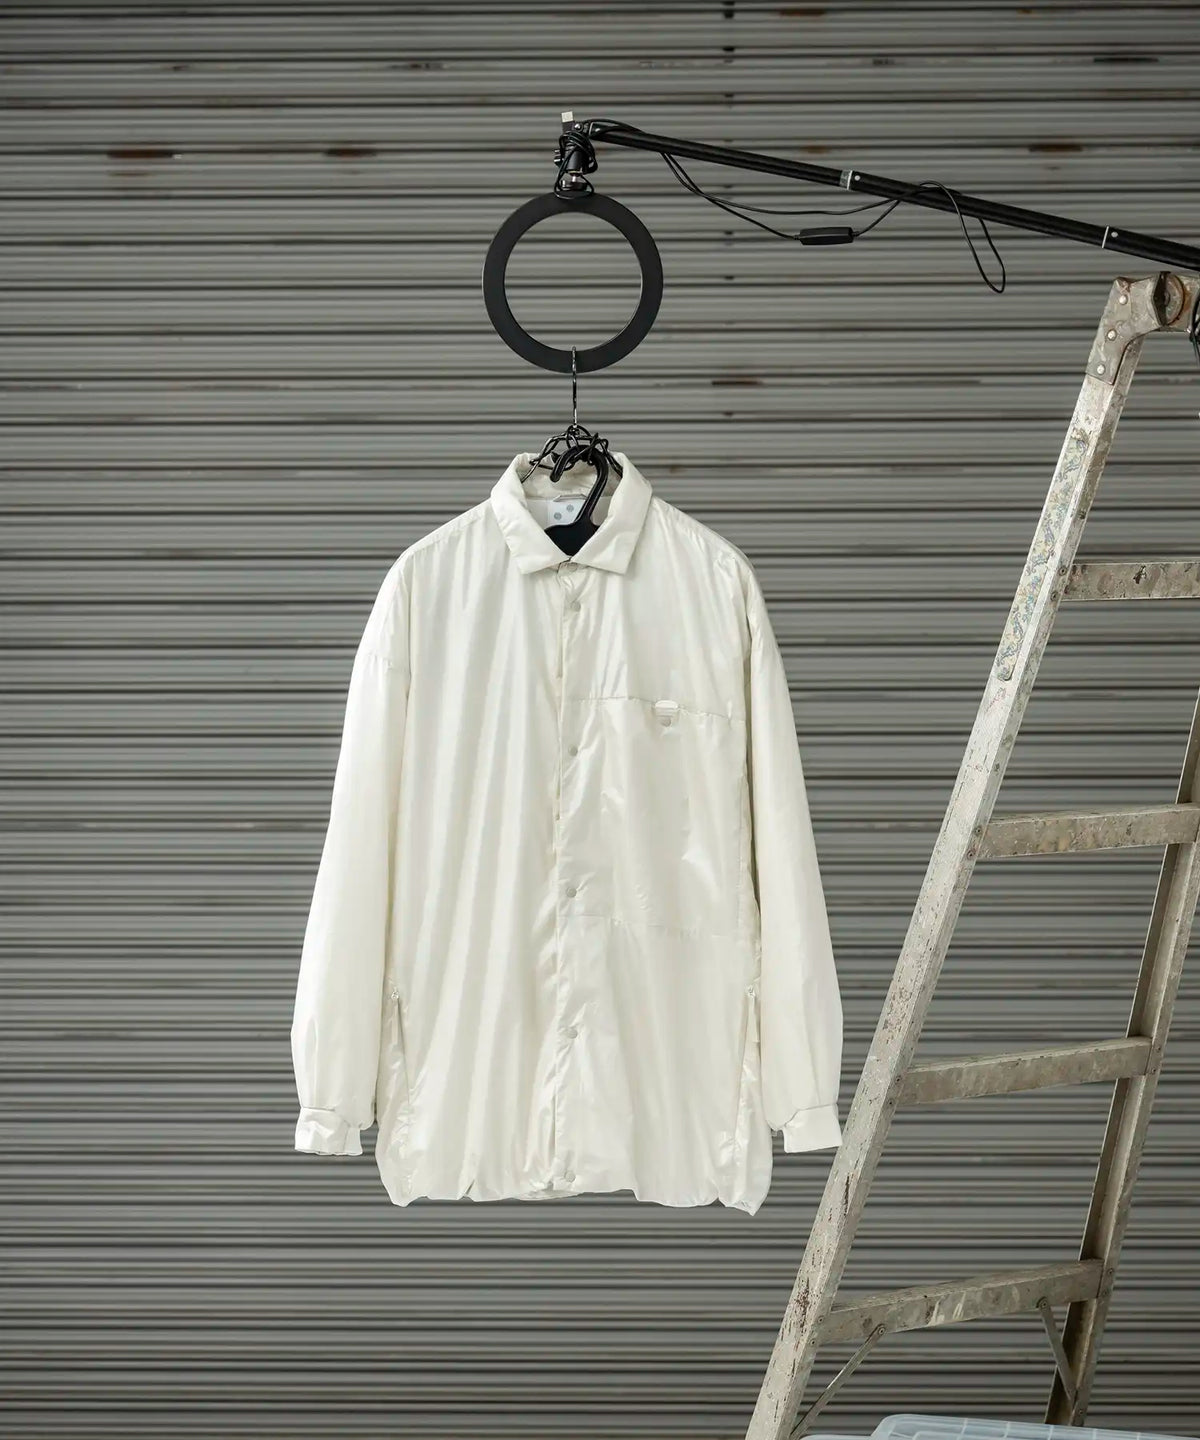 【MENS】ロングスリーブシャツ 中綿入りシャツ Insulated air shirts / Brilliance shade down proof / アルクフェニックス